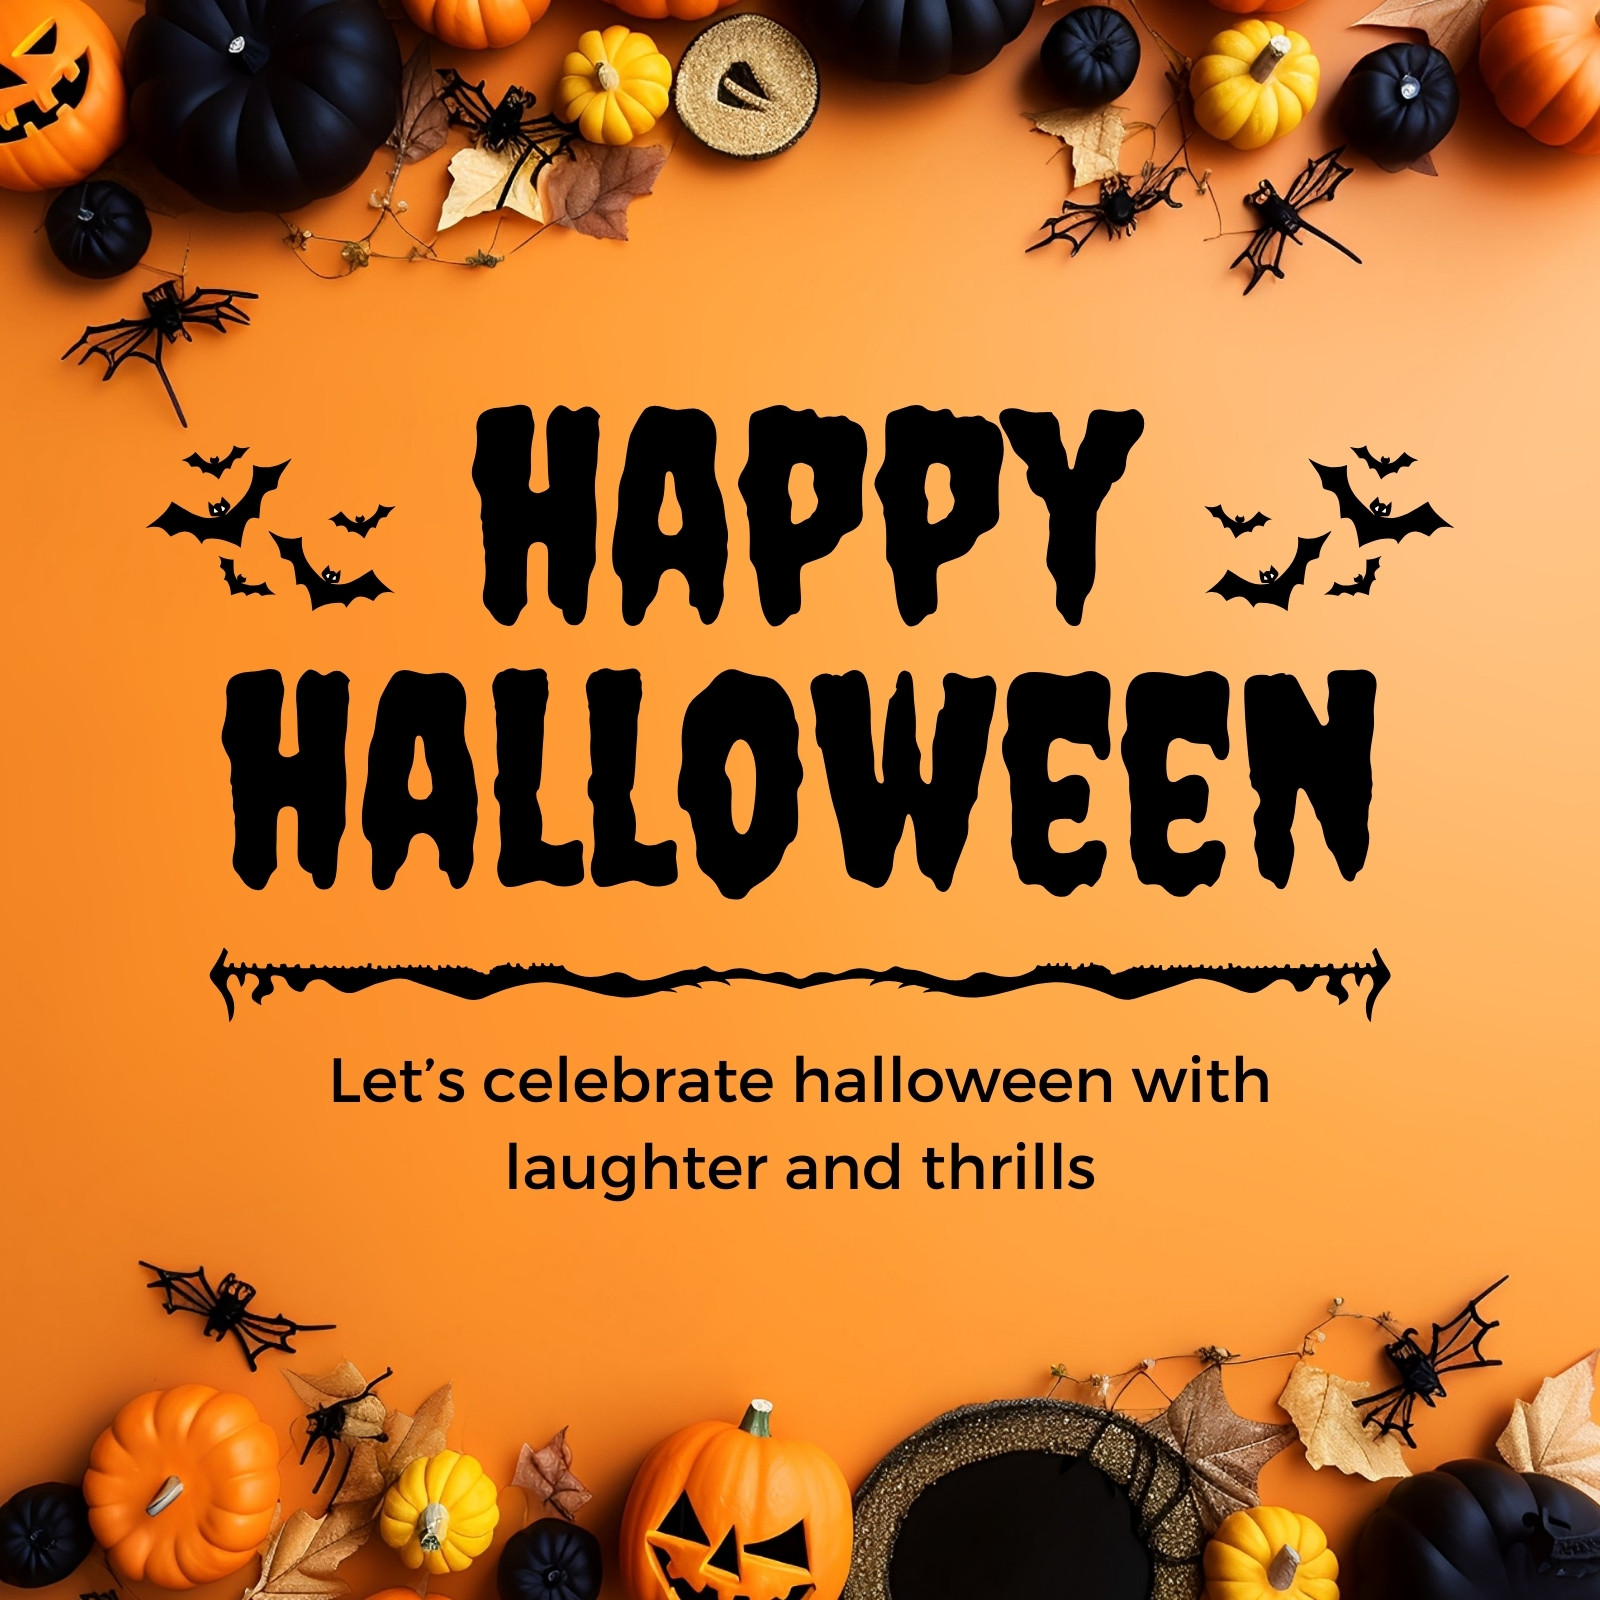 Free and customizable halloween templates